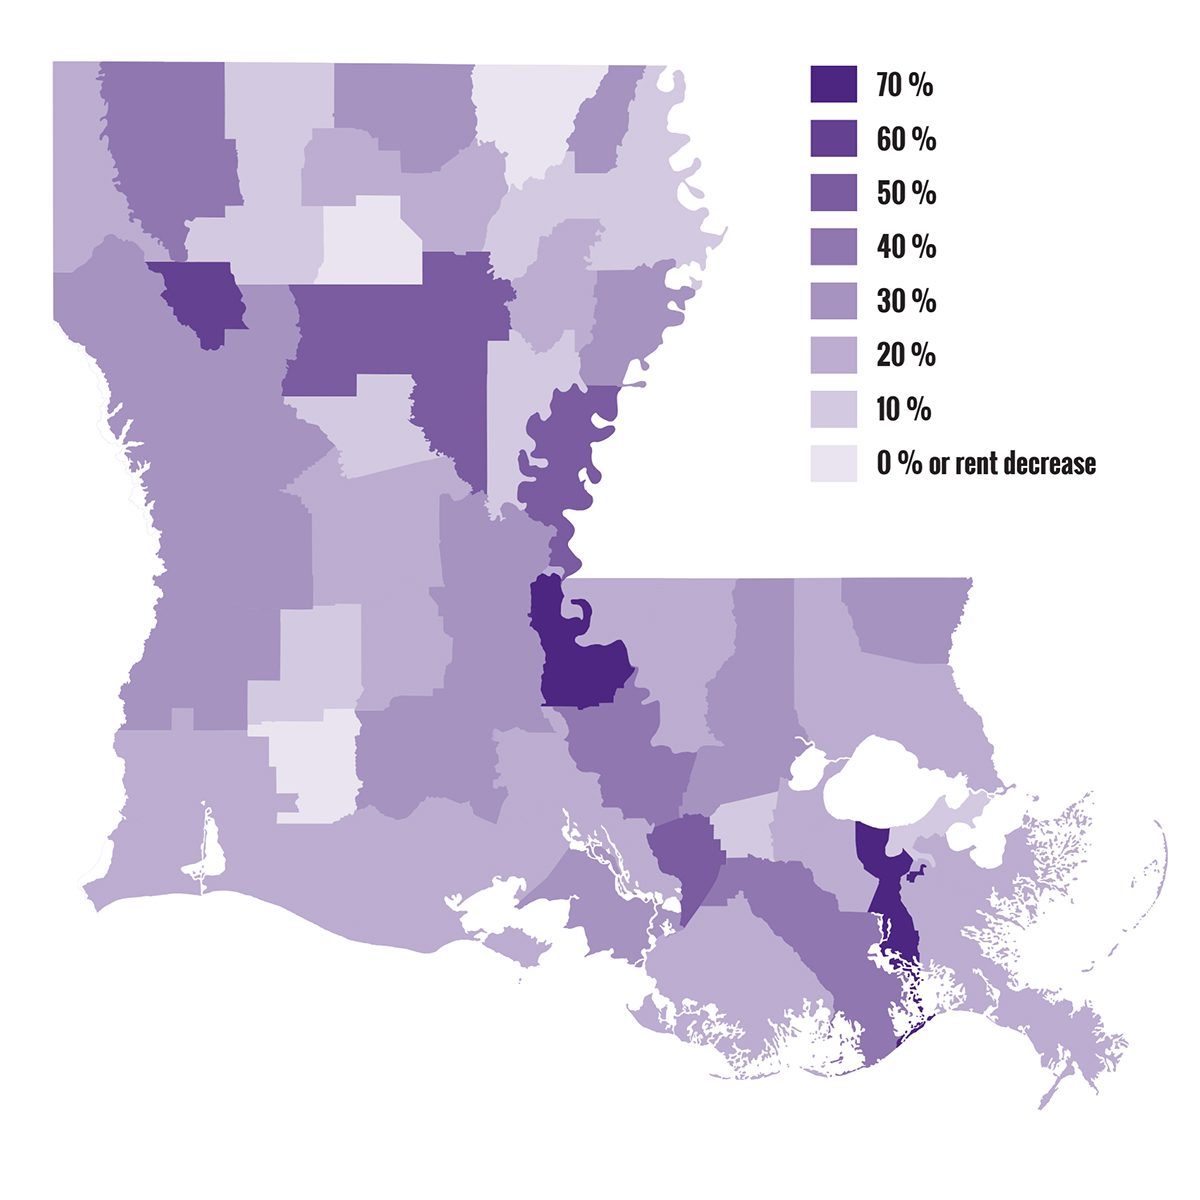 Parish map of rent increases